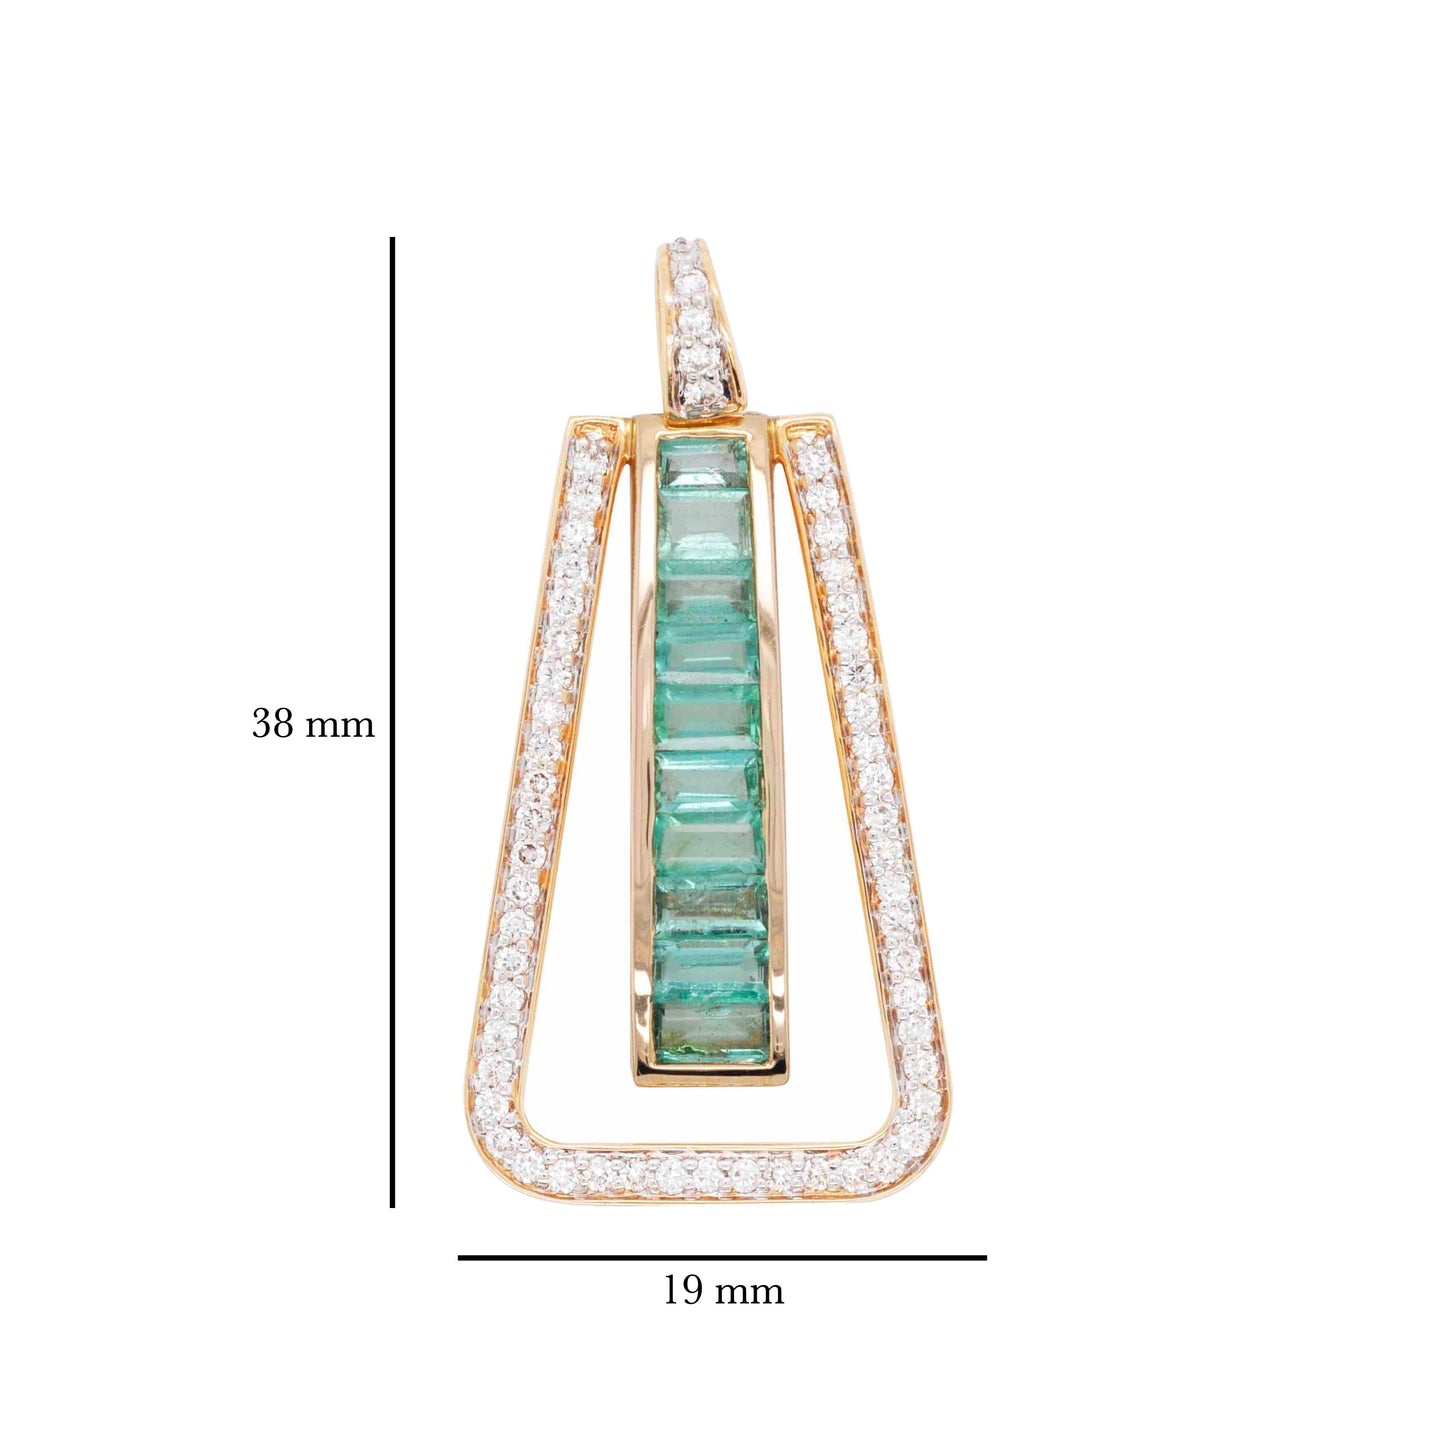 18K Gold Art Deco Channel-Set Emerald Diamond Pendant Necklace - Vaibhav Dhadda Jewelry